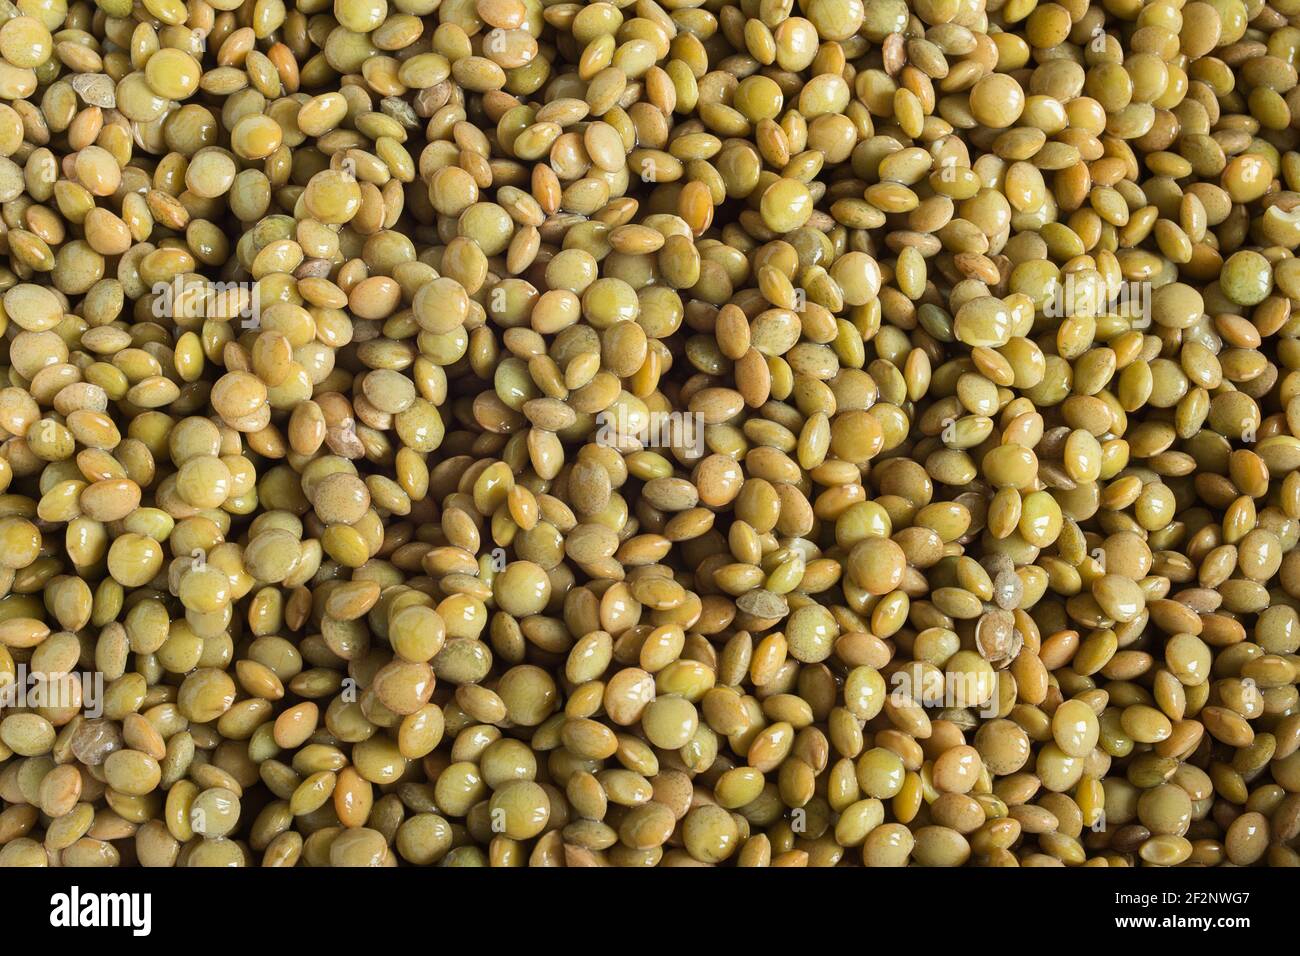 Pardina lentils hi-res stock photography and images - Alamy